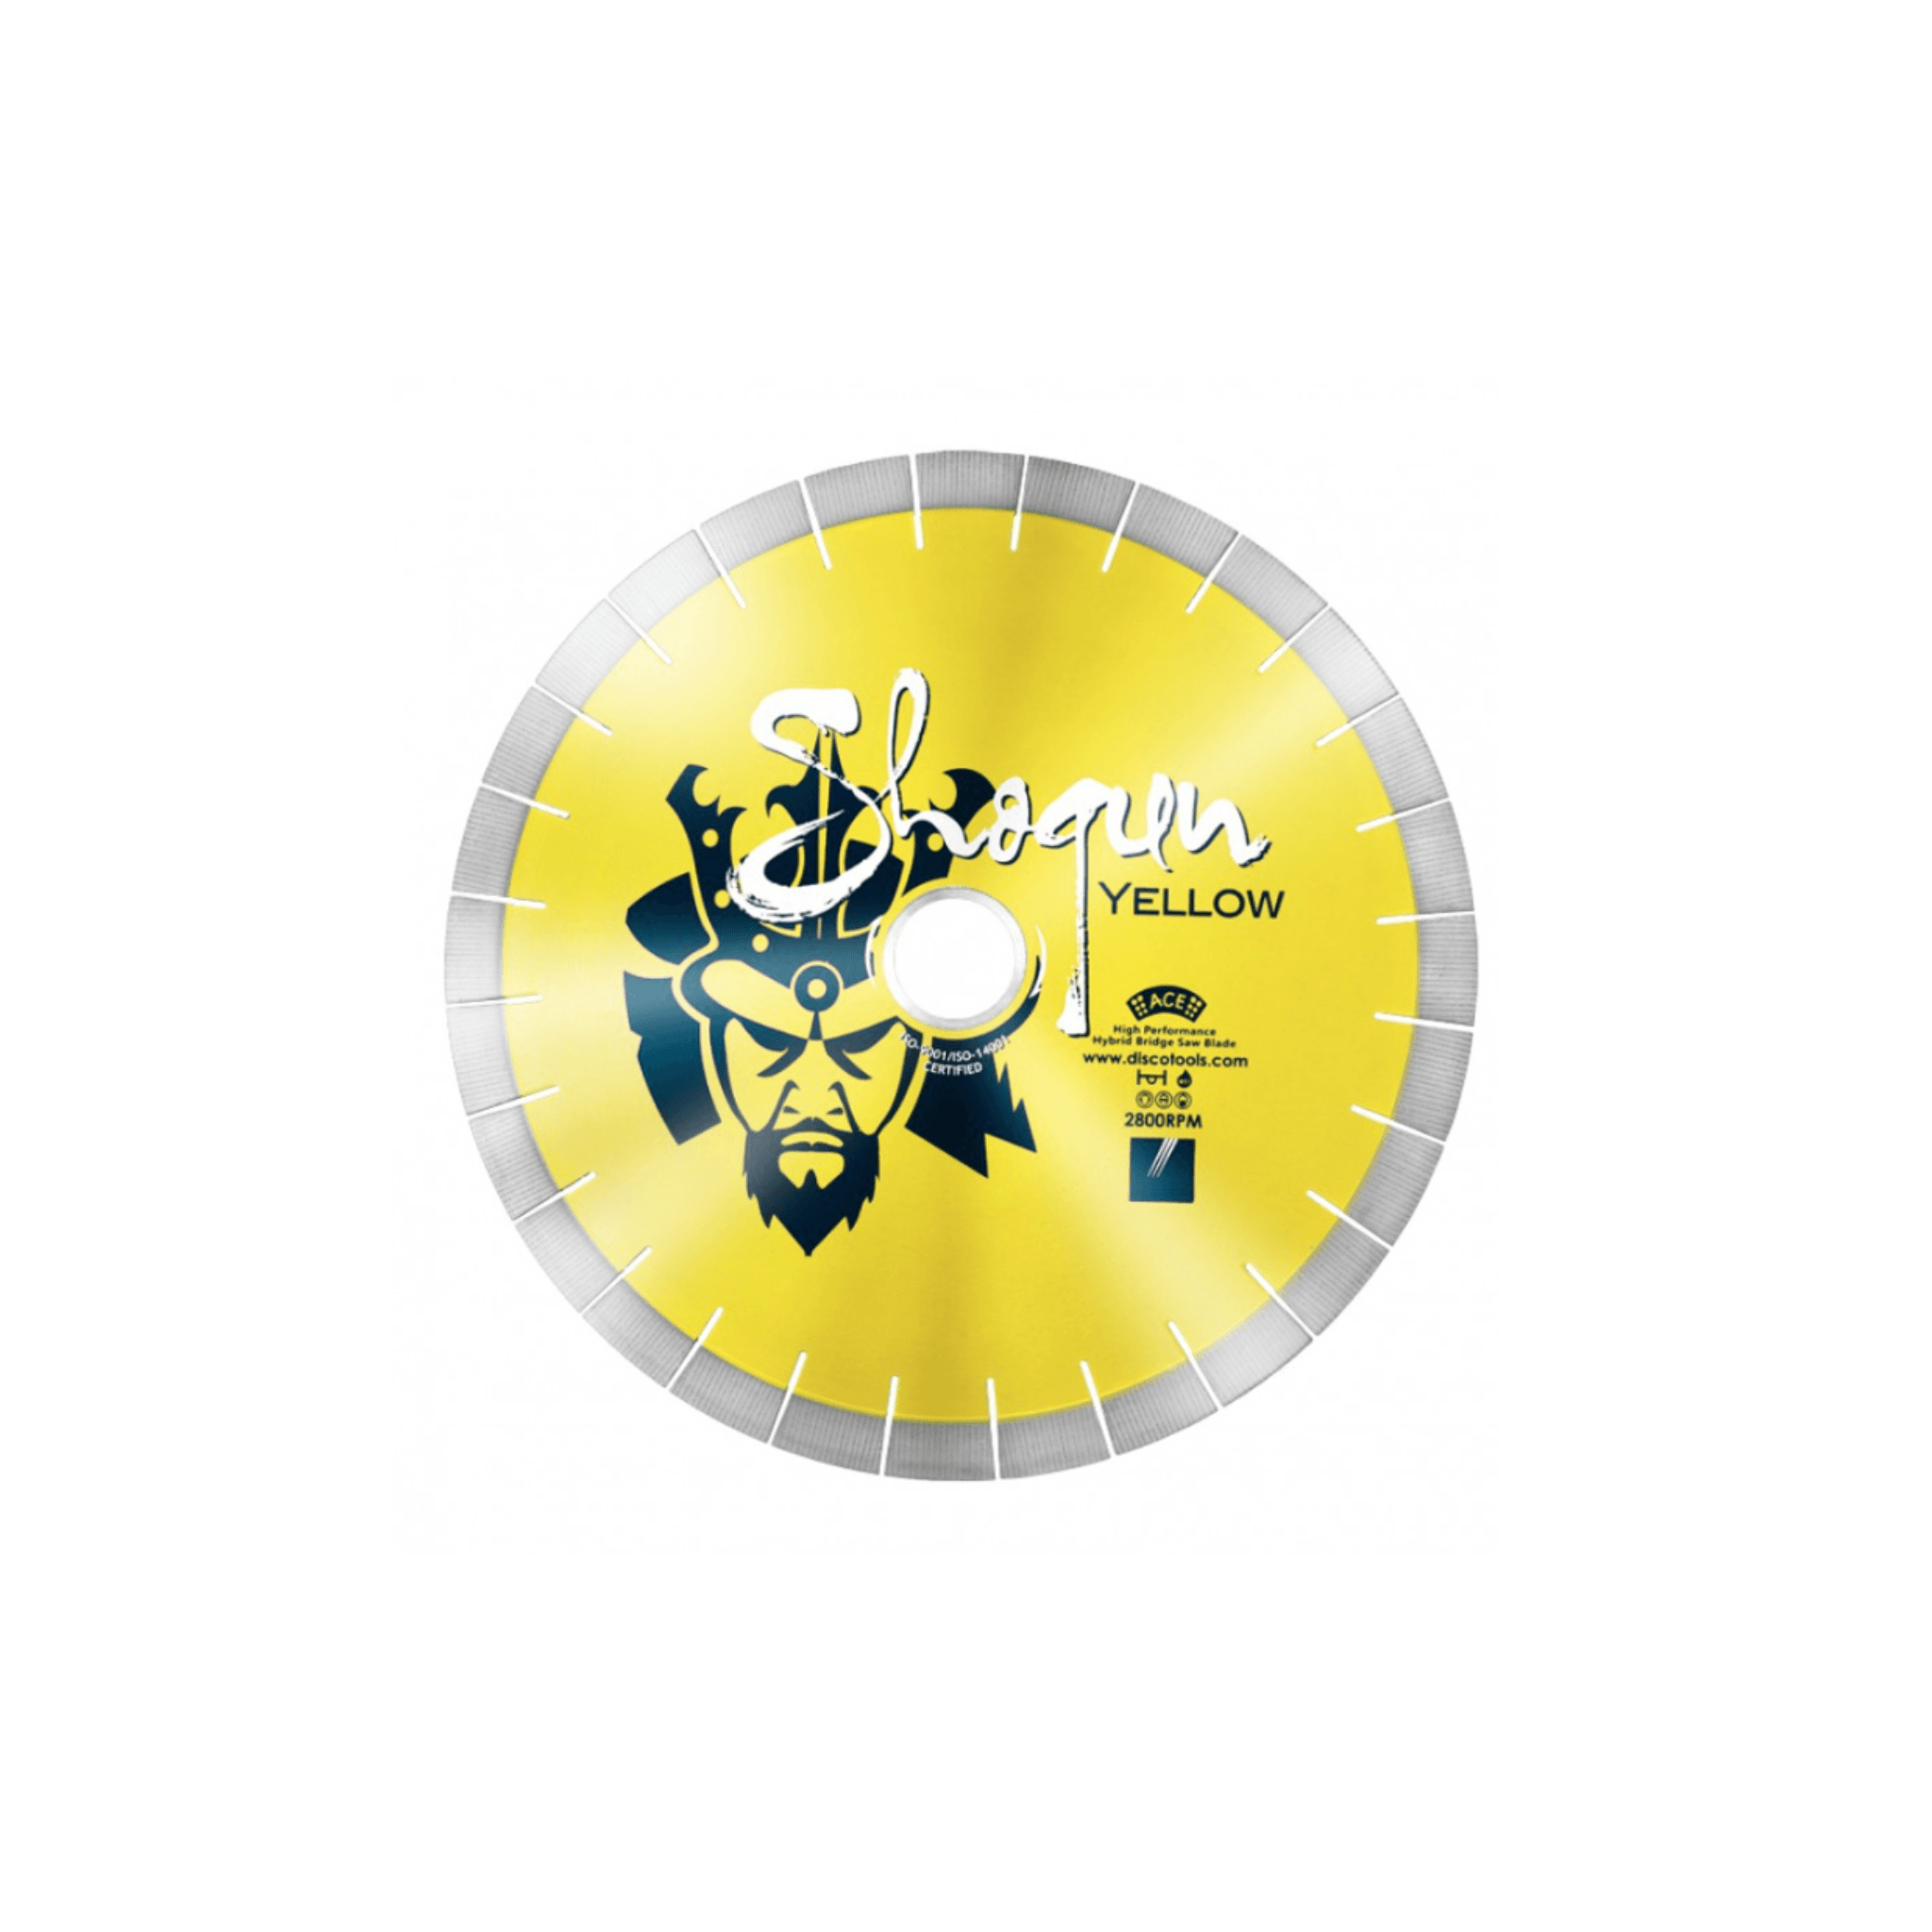 Disco Shogun Yellow 18" Blade - Direct Stone Tool Supply, Inc